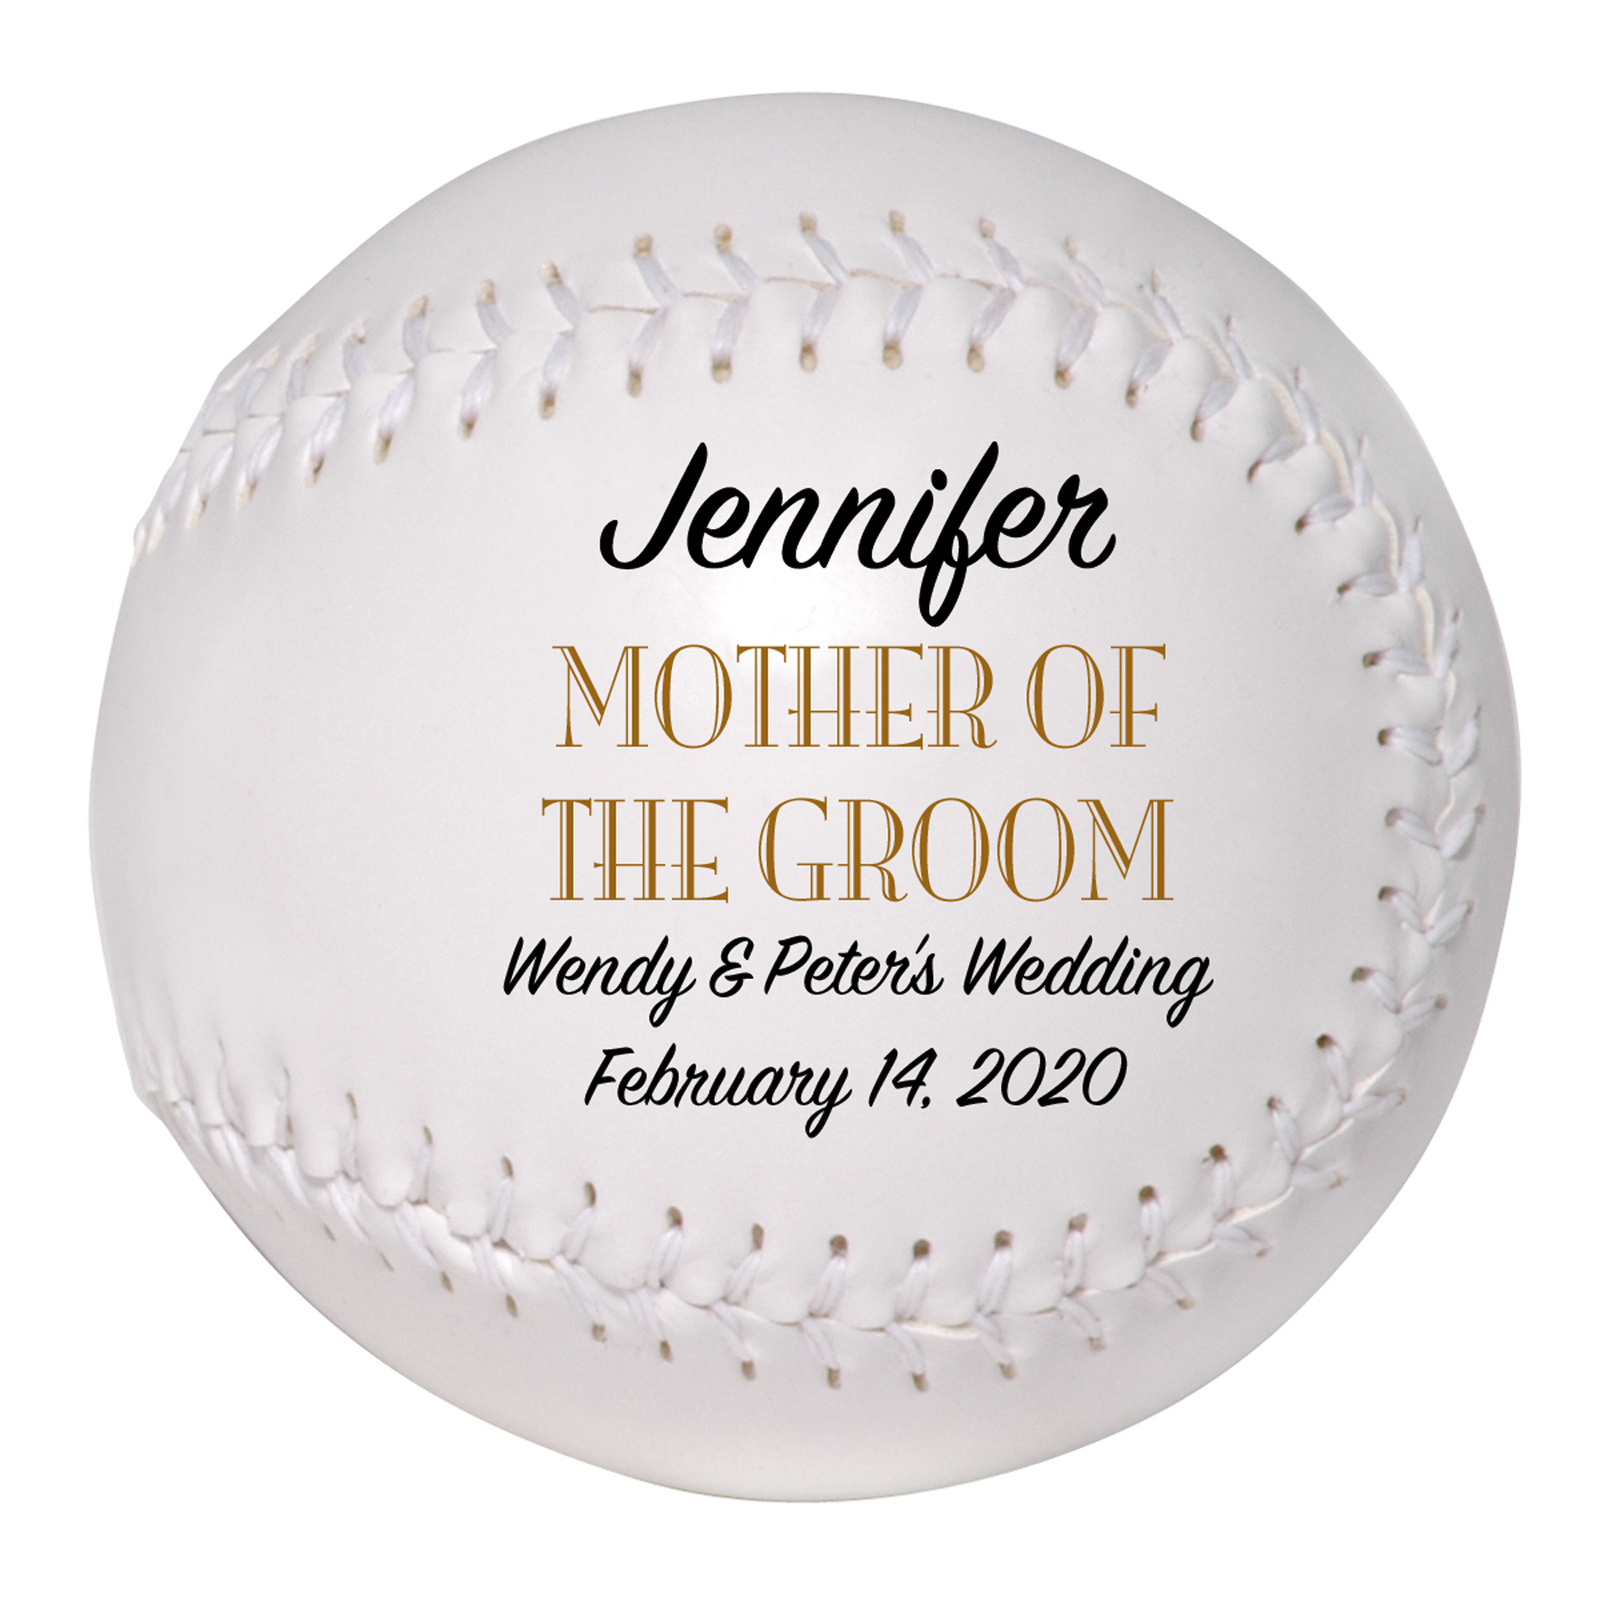 Mother of the Groom Custom Softball Wedding Gift - Personalized Wedding Favor